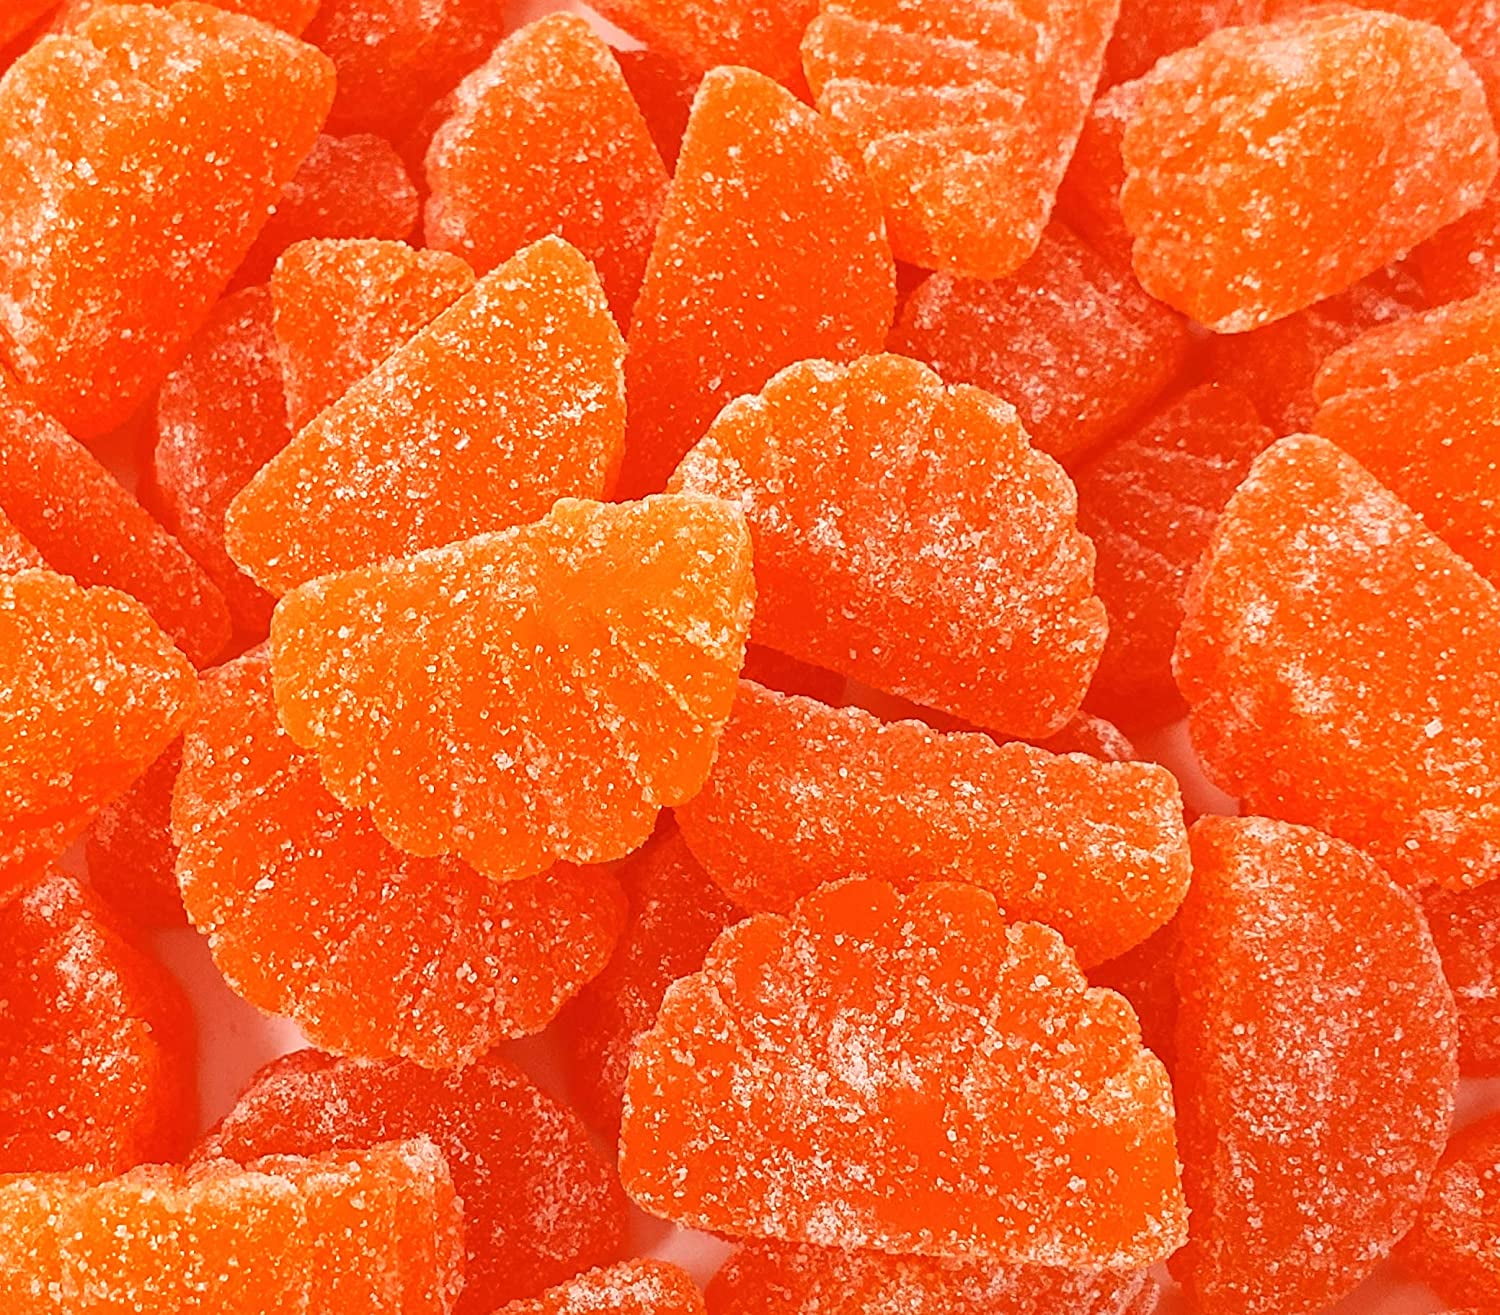 Orange Fruit Slice Candy, Bulk Pack, 2 Lbs - Walmart.com - Walmart.com